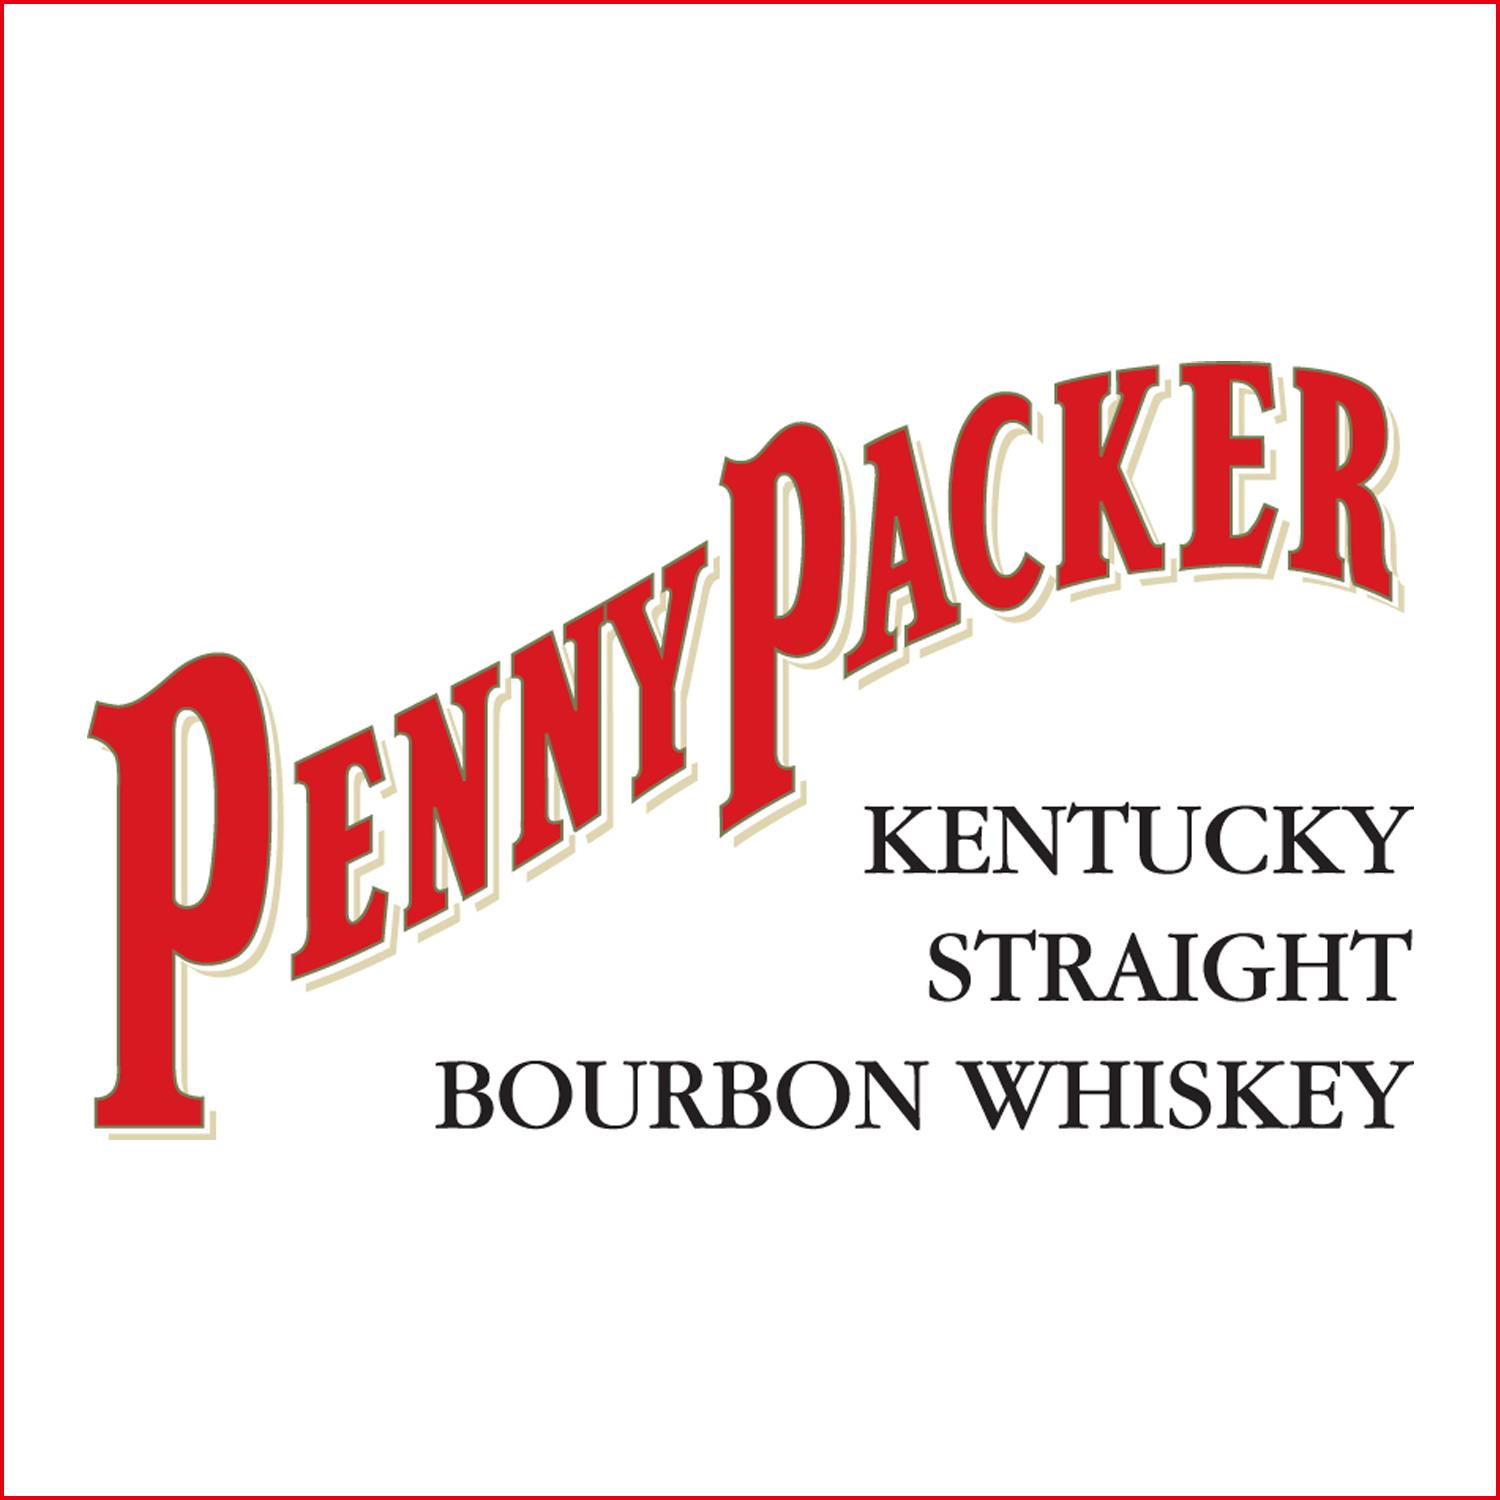 潘尼派克 Penny Packer